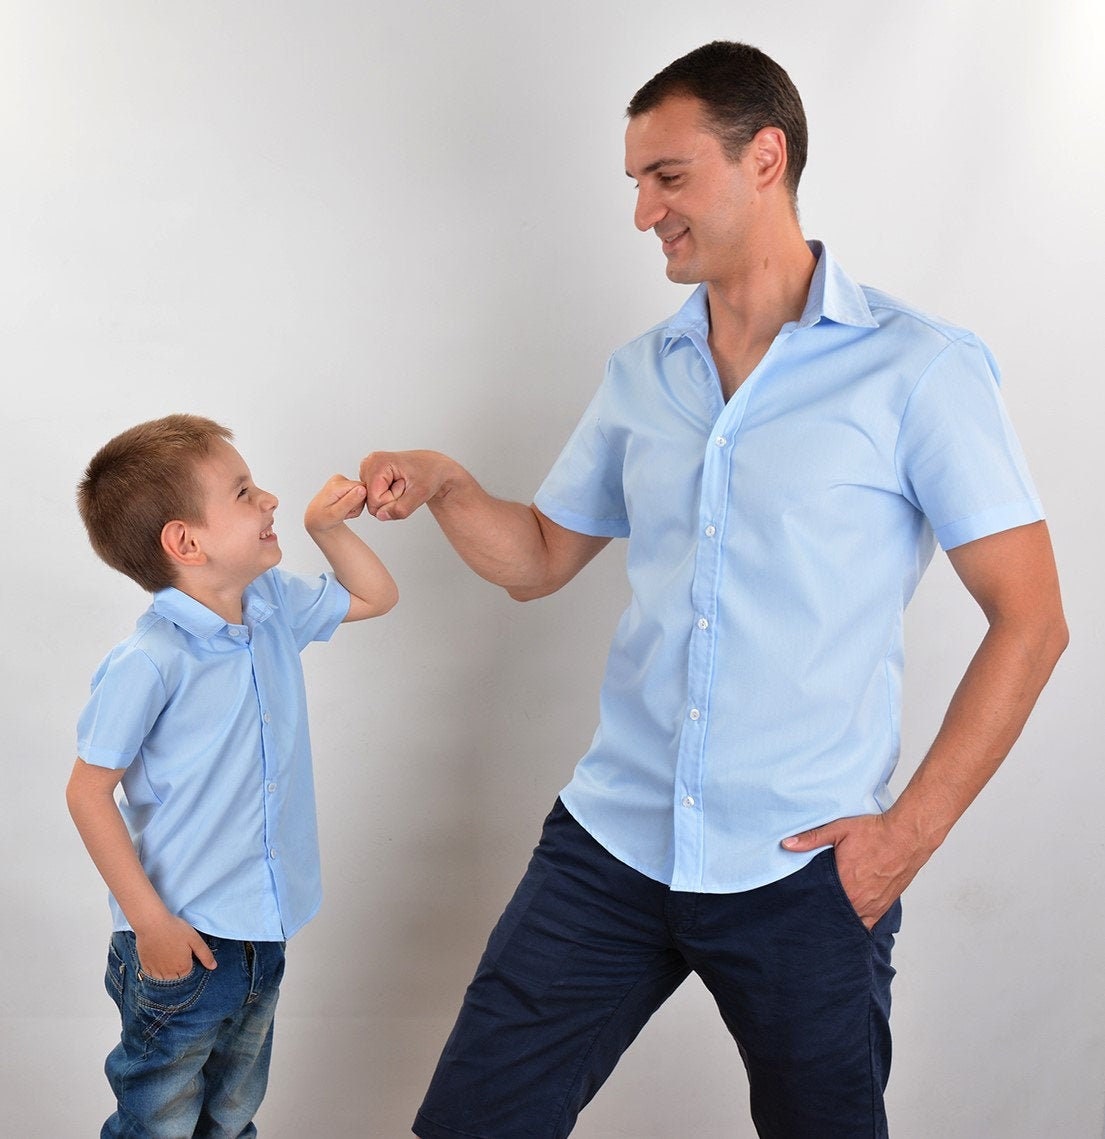 dad and son matching dress shirts